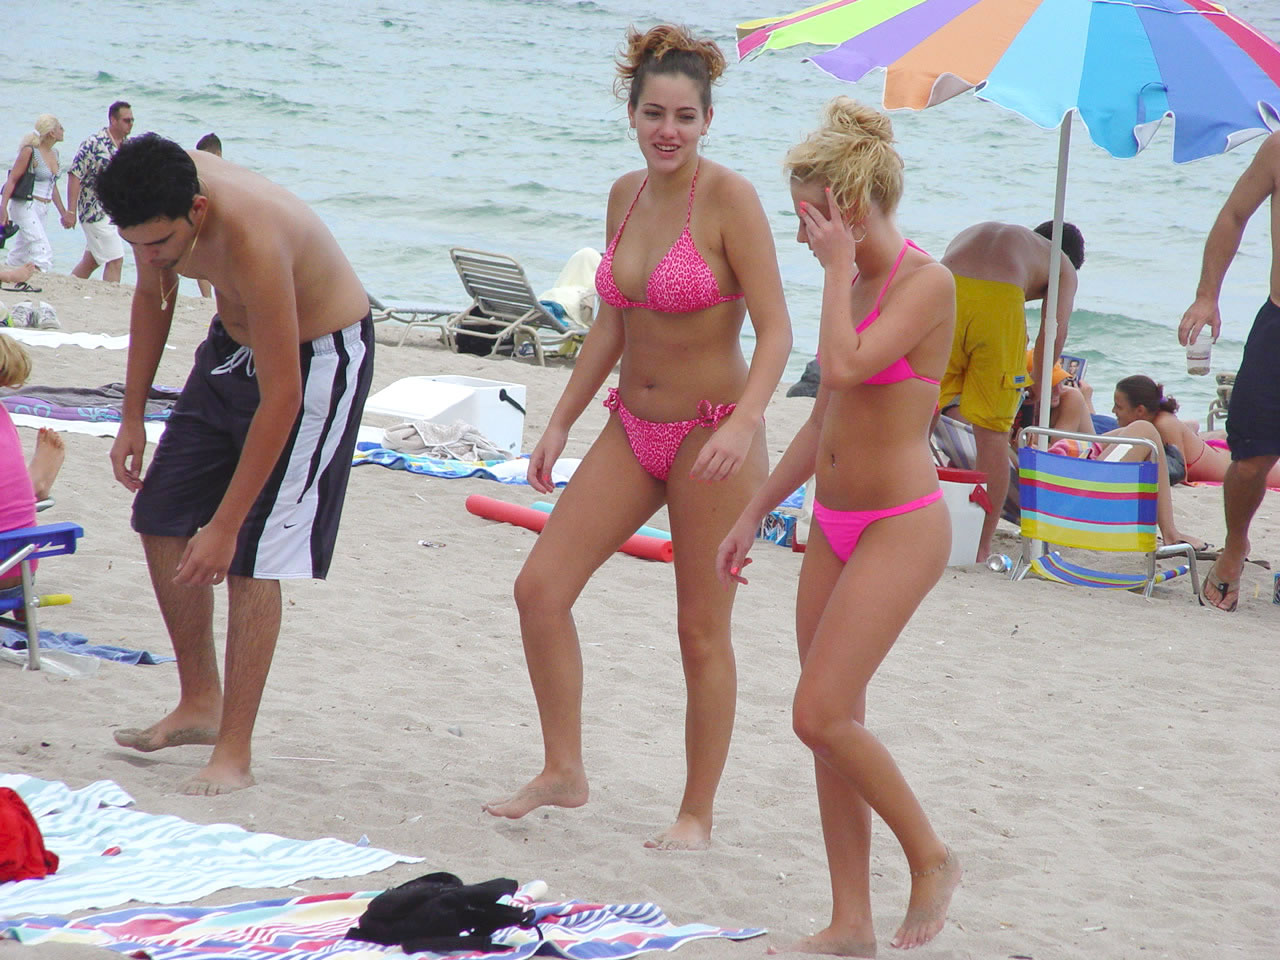 Pink bikini babes walking on hot beach sands photo photo